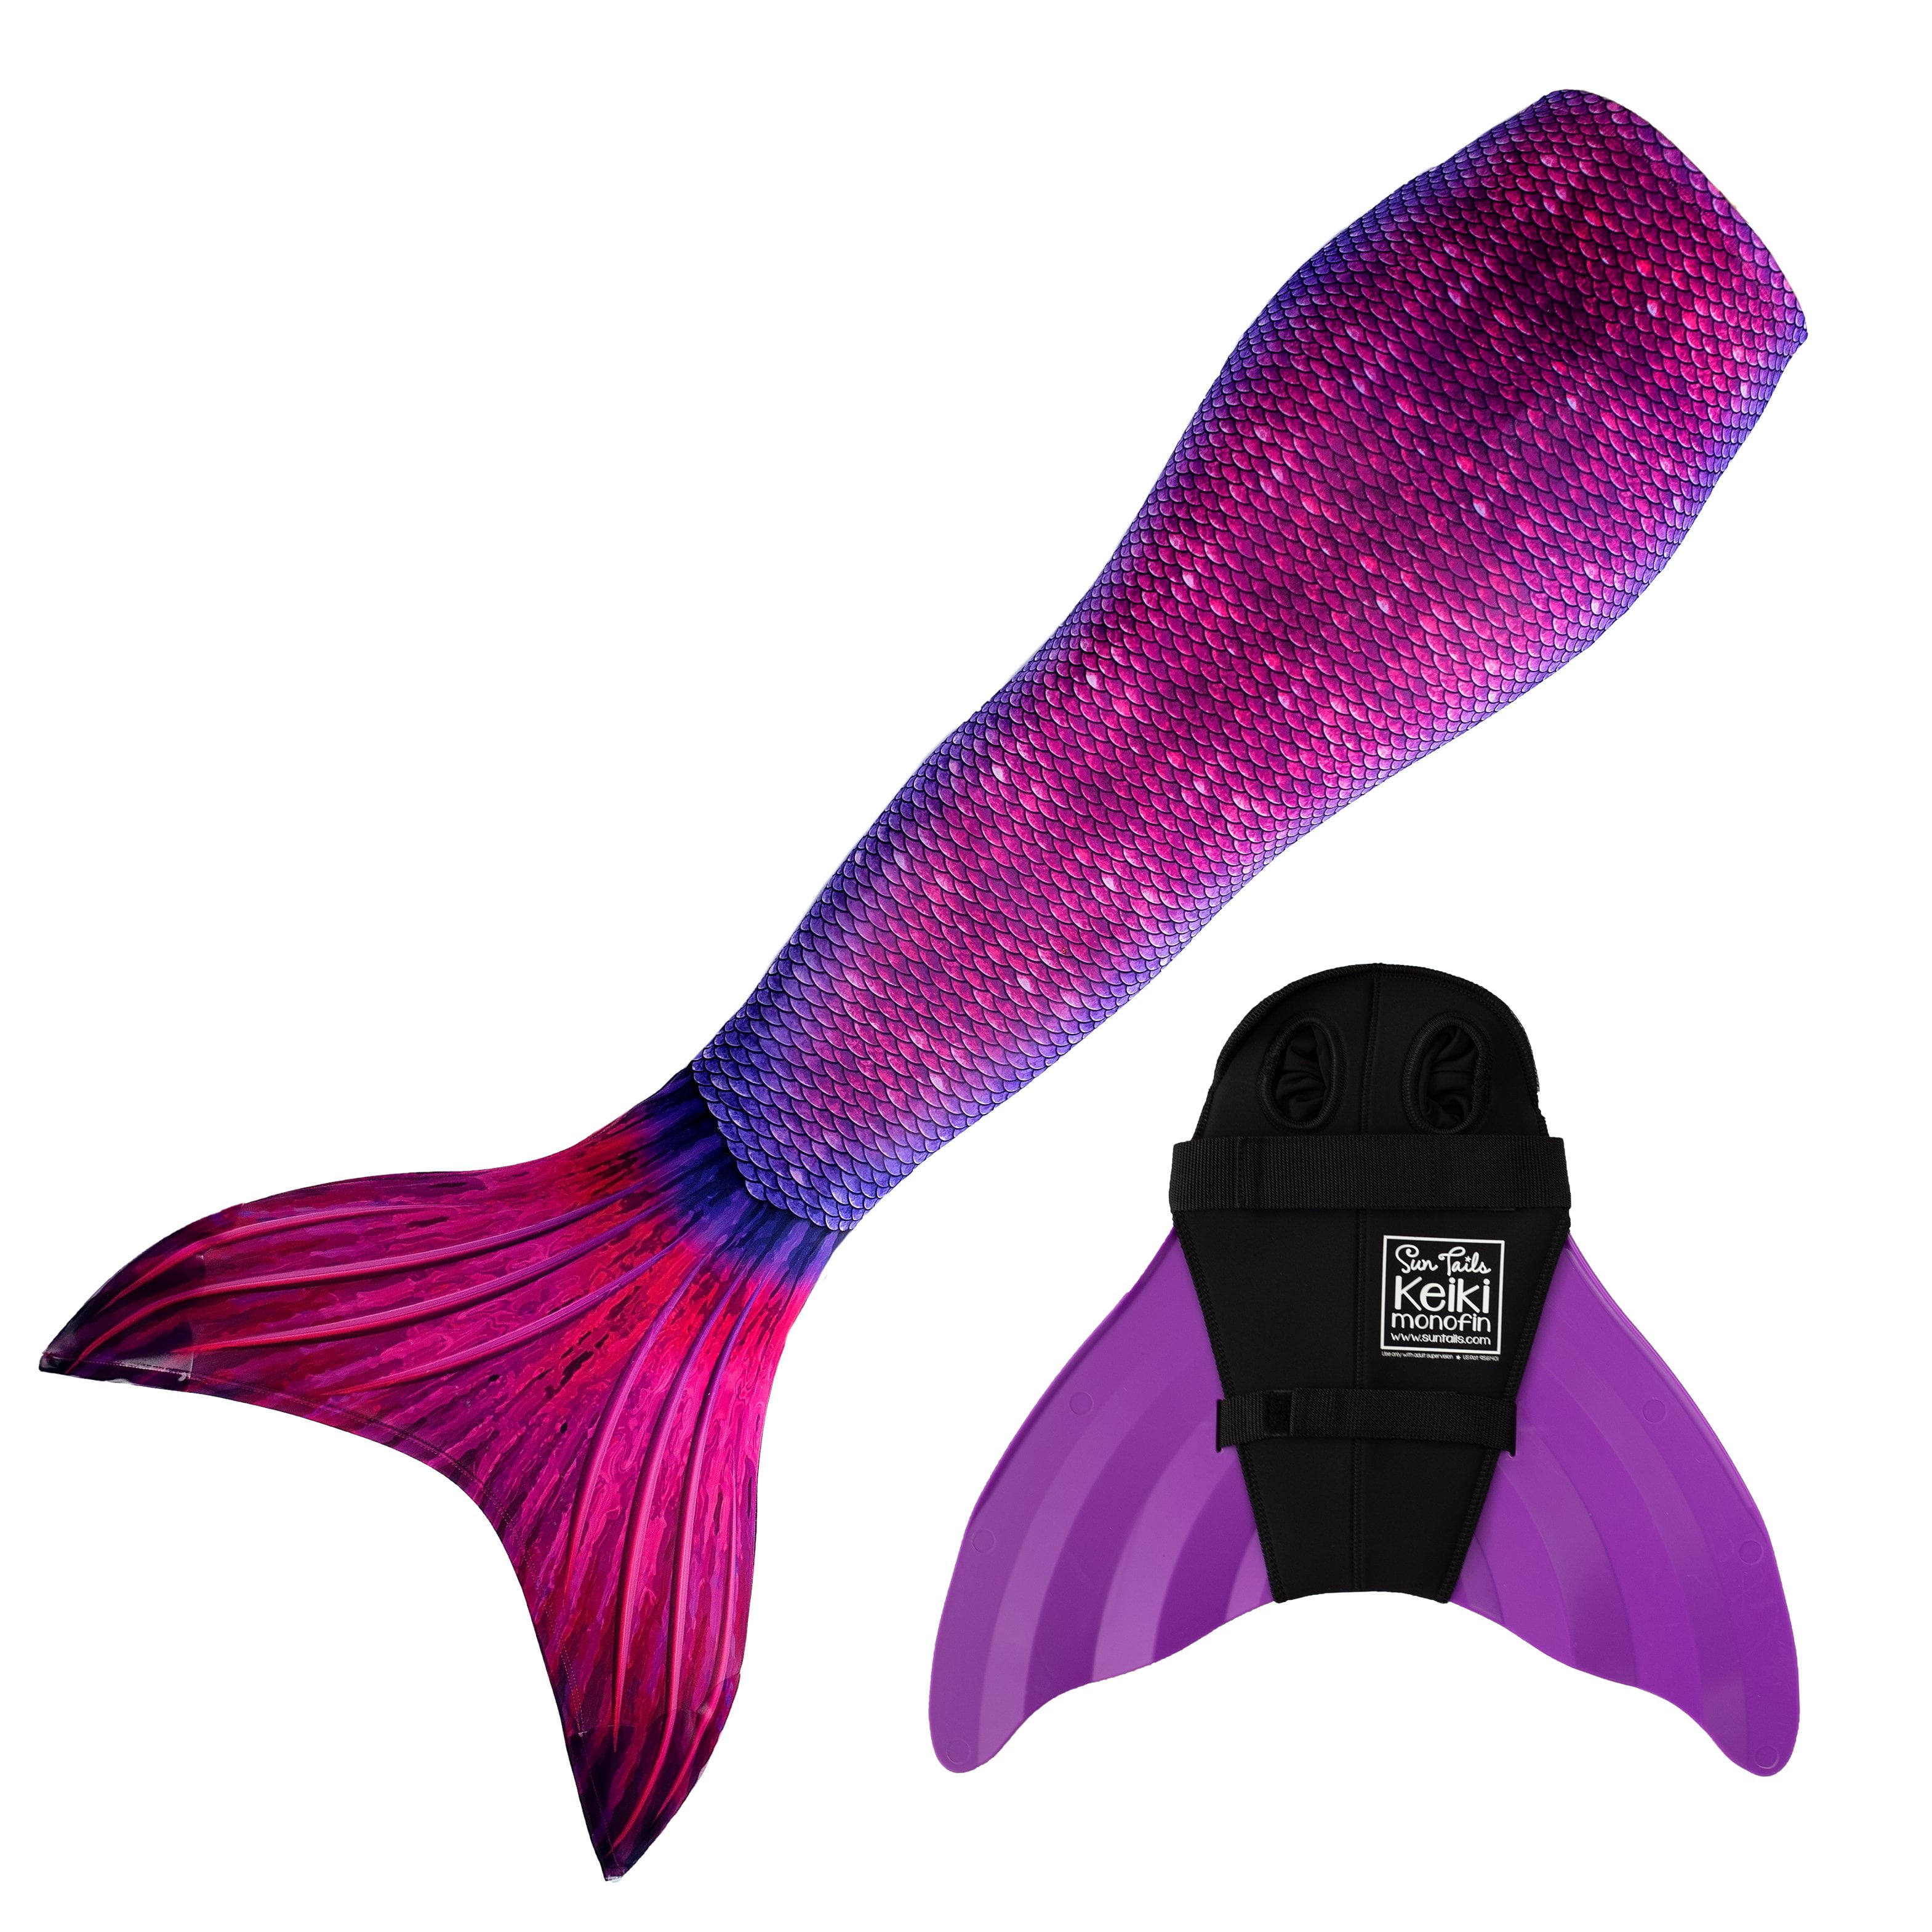 Sun Tail Mermaid Swim Set; Bali Blush Mermaid Tail + Purple Monofin for